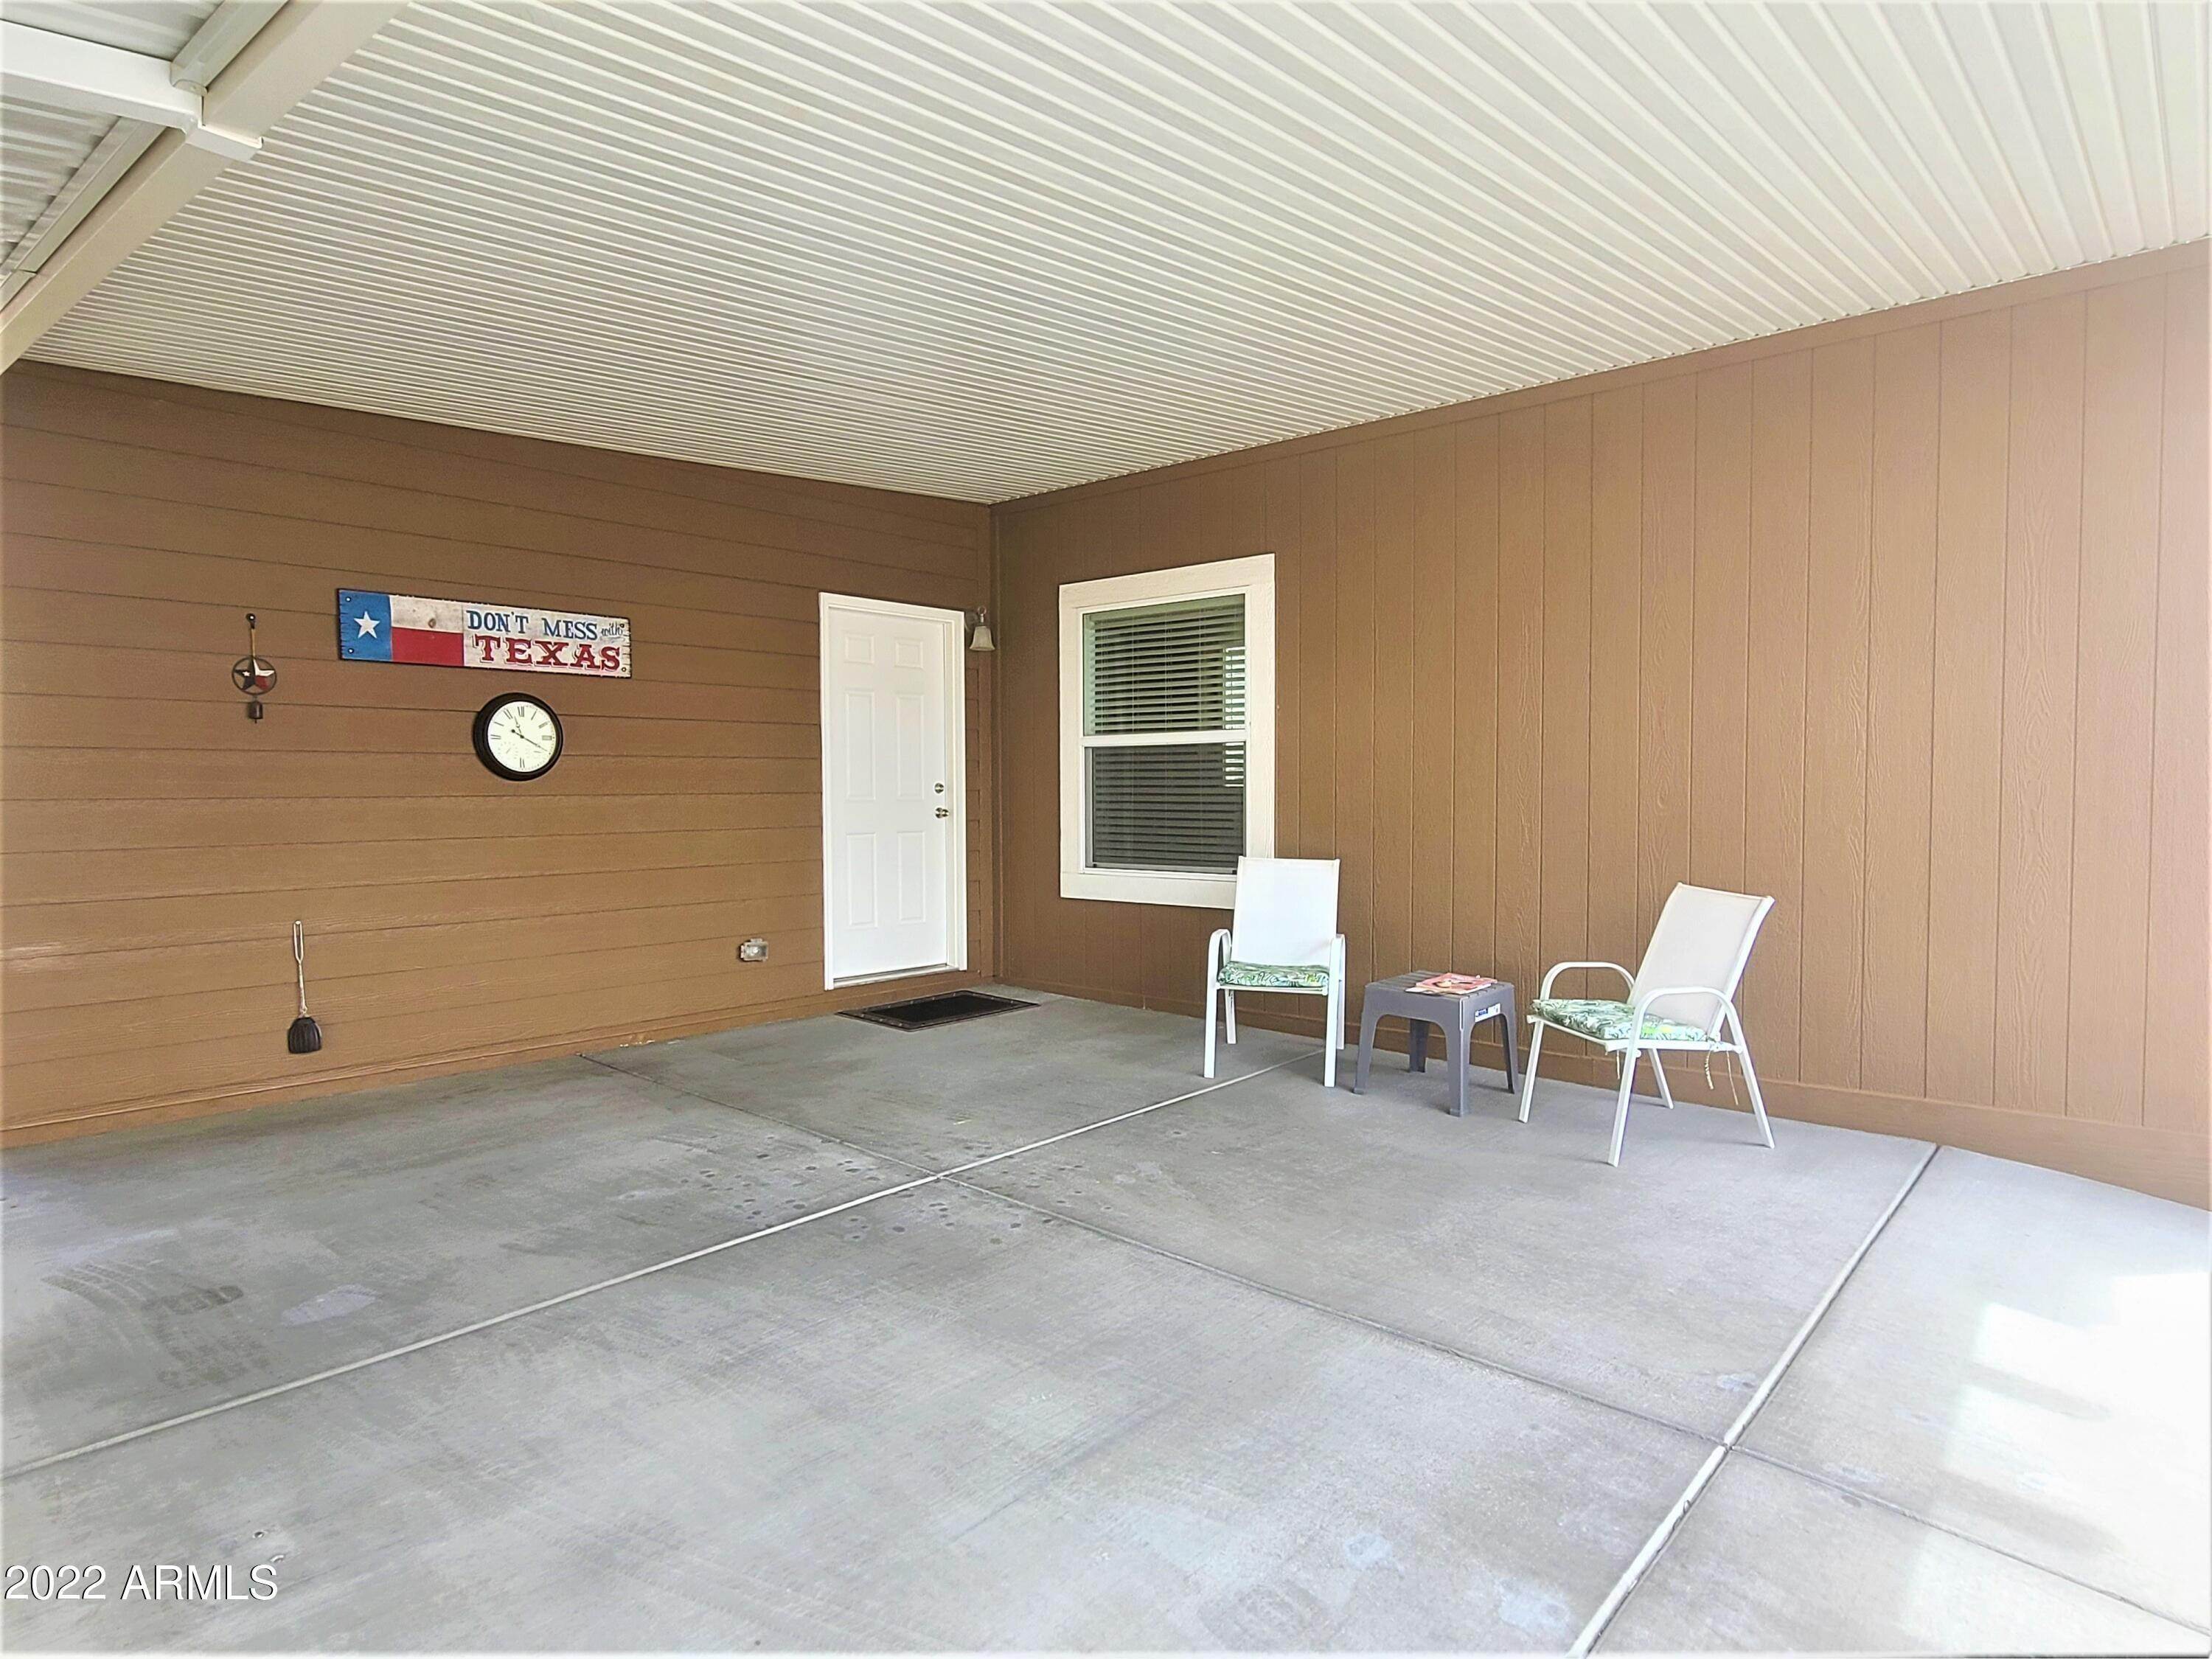 10. Mobile Home for Sale at Mesa, AZ 85207